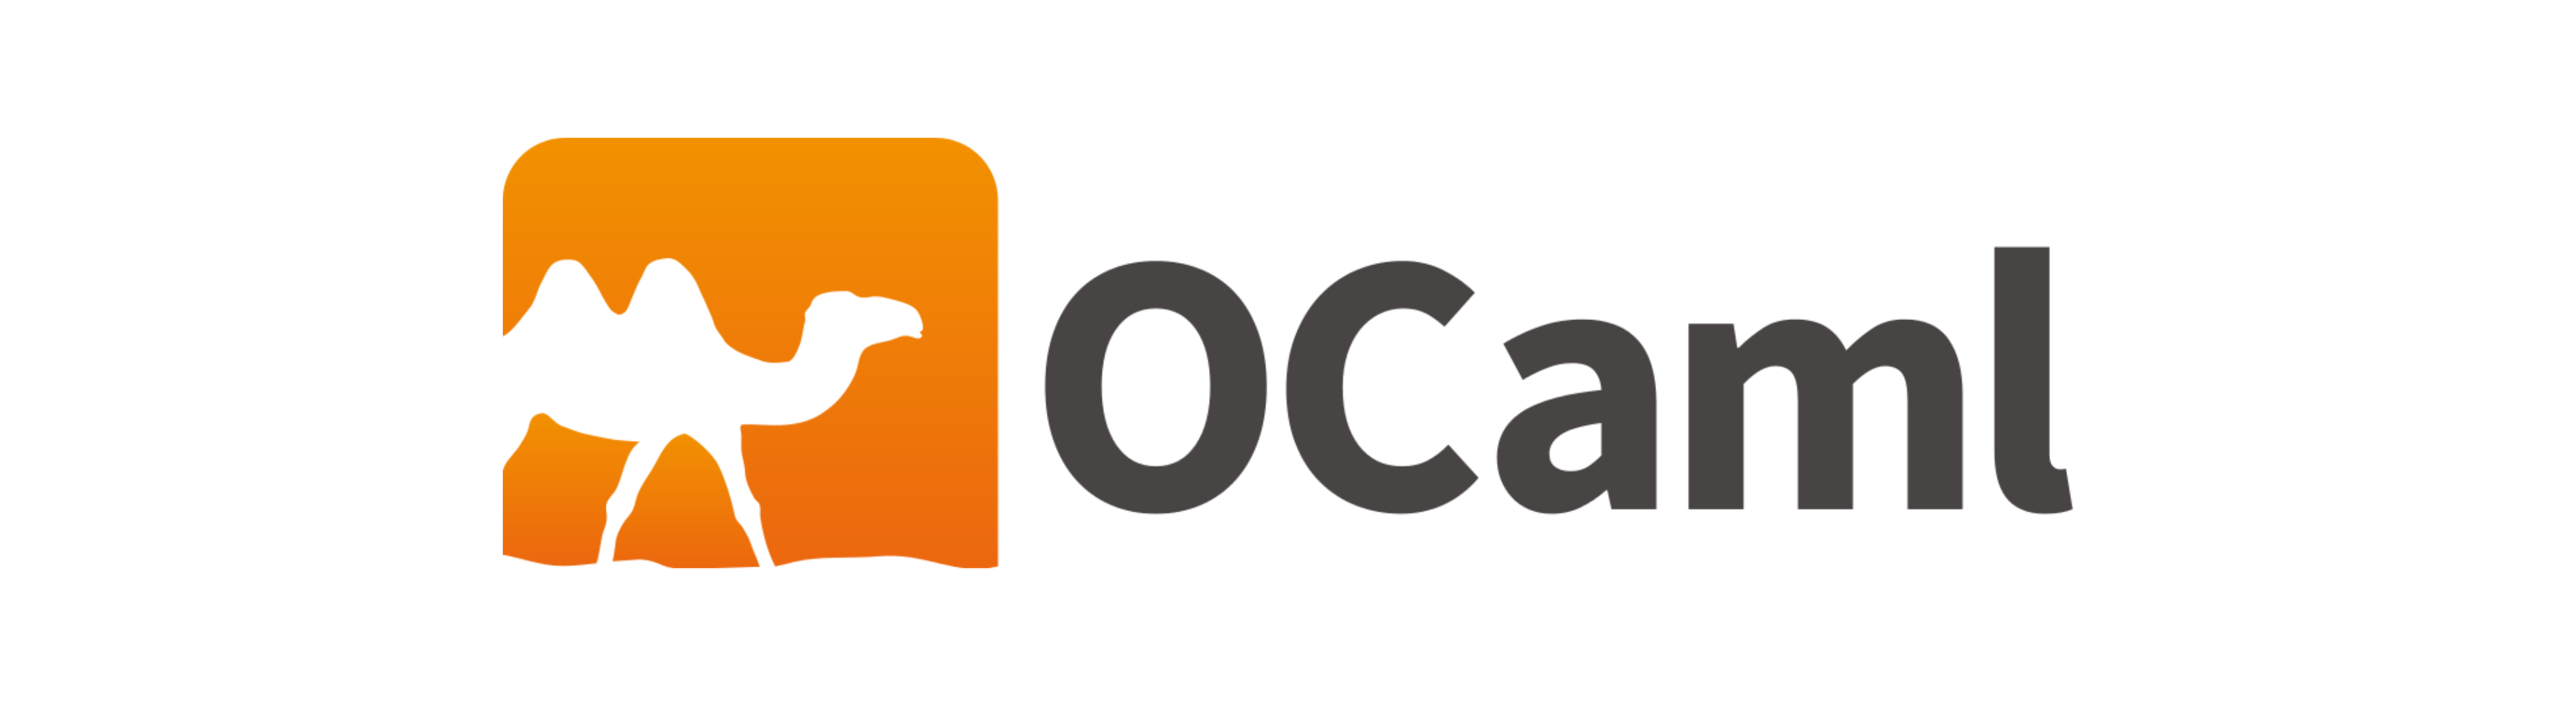 Logo of the OCaml language